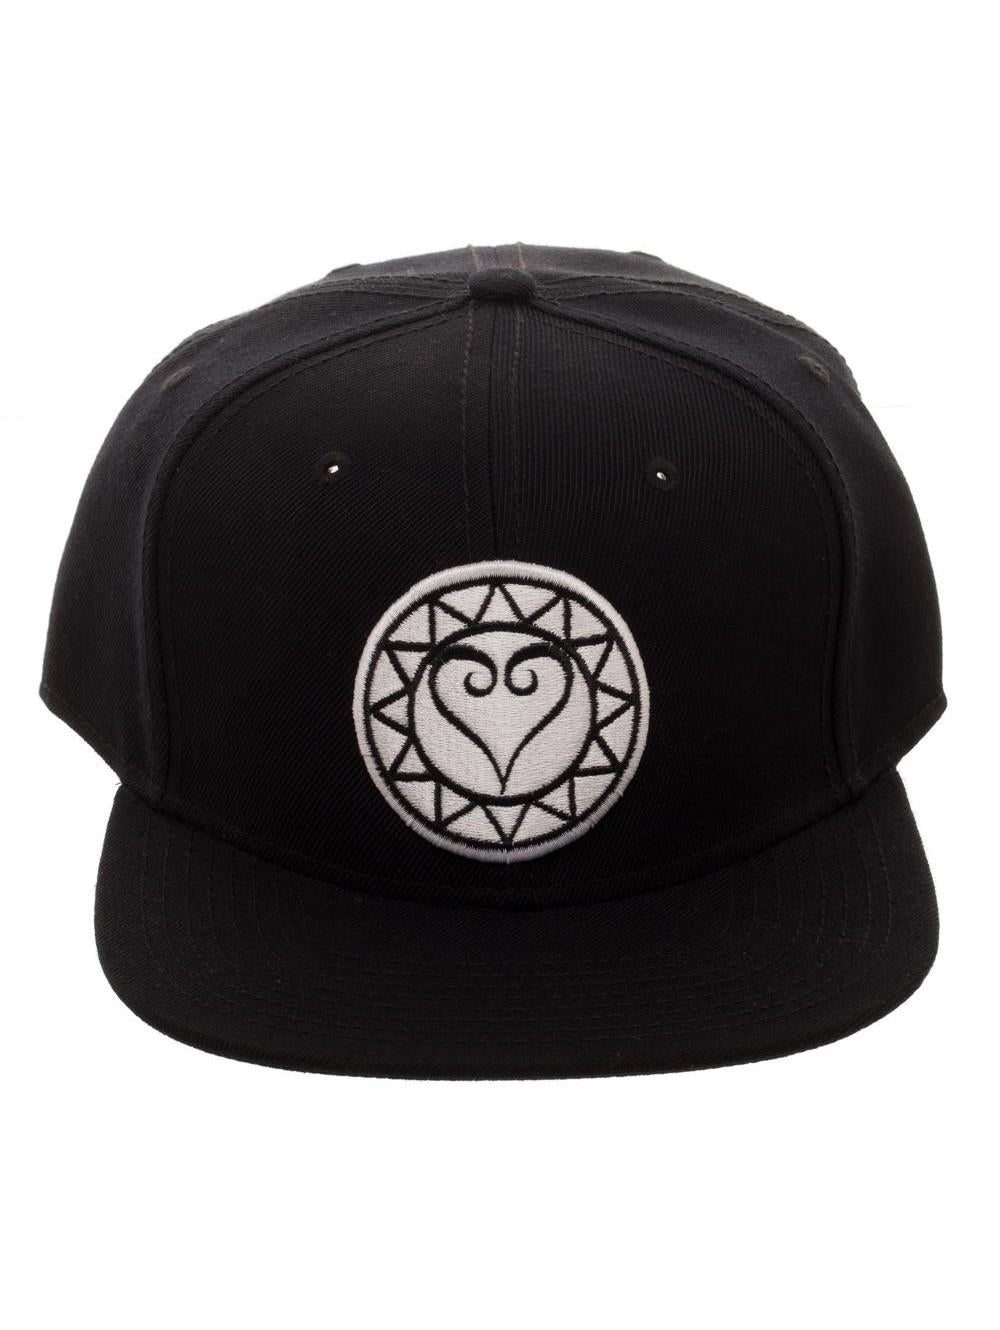 Kingdom Hearts: Emblem Snapback Hat